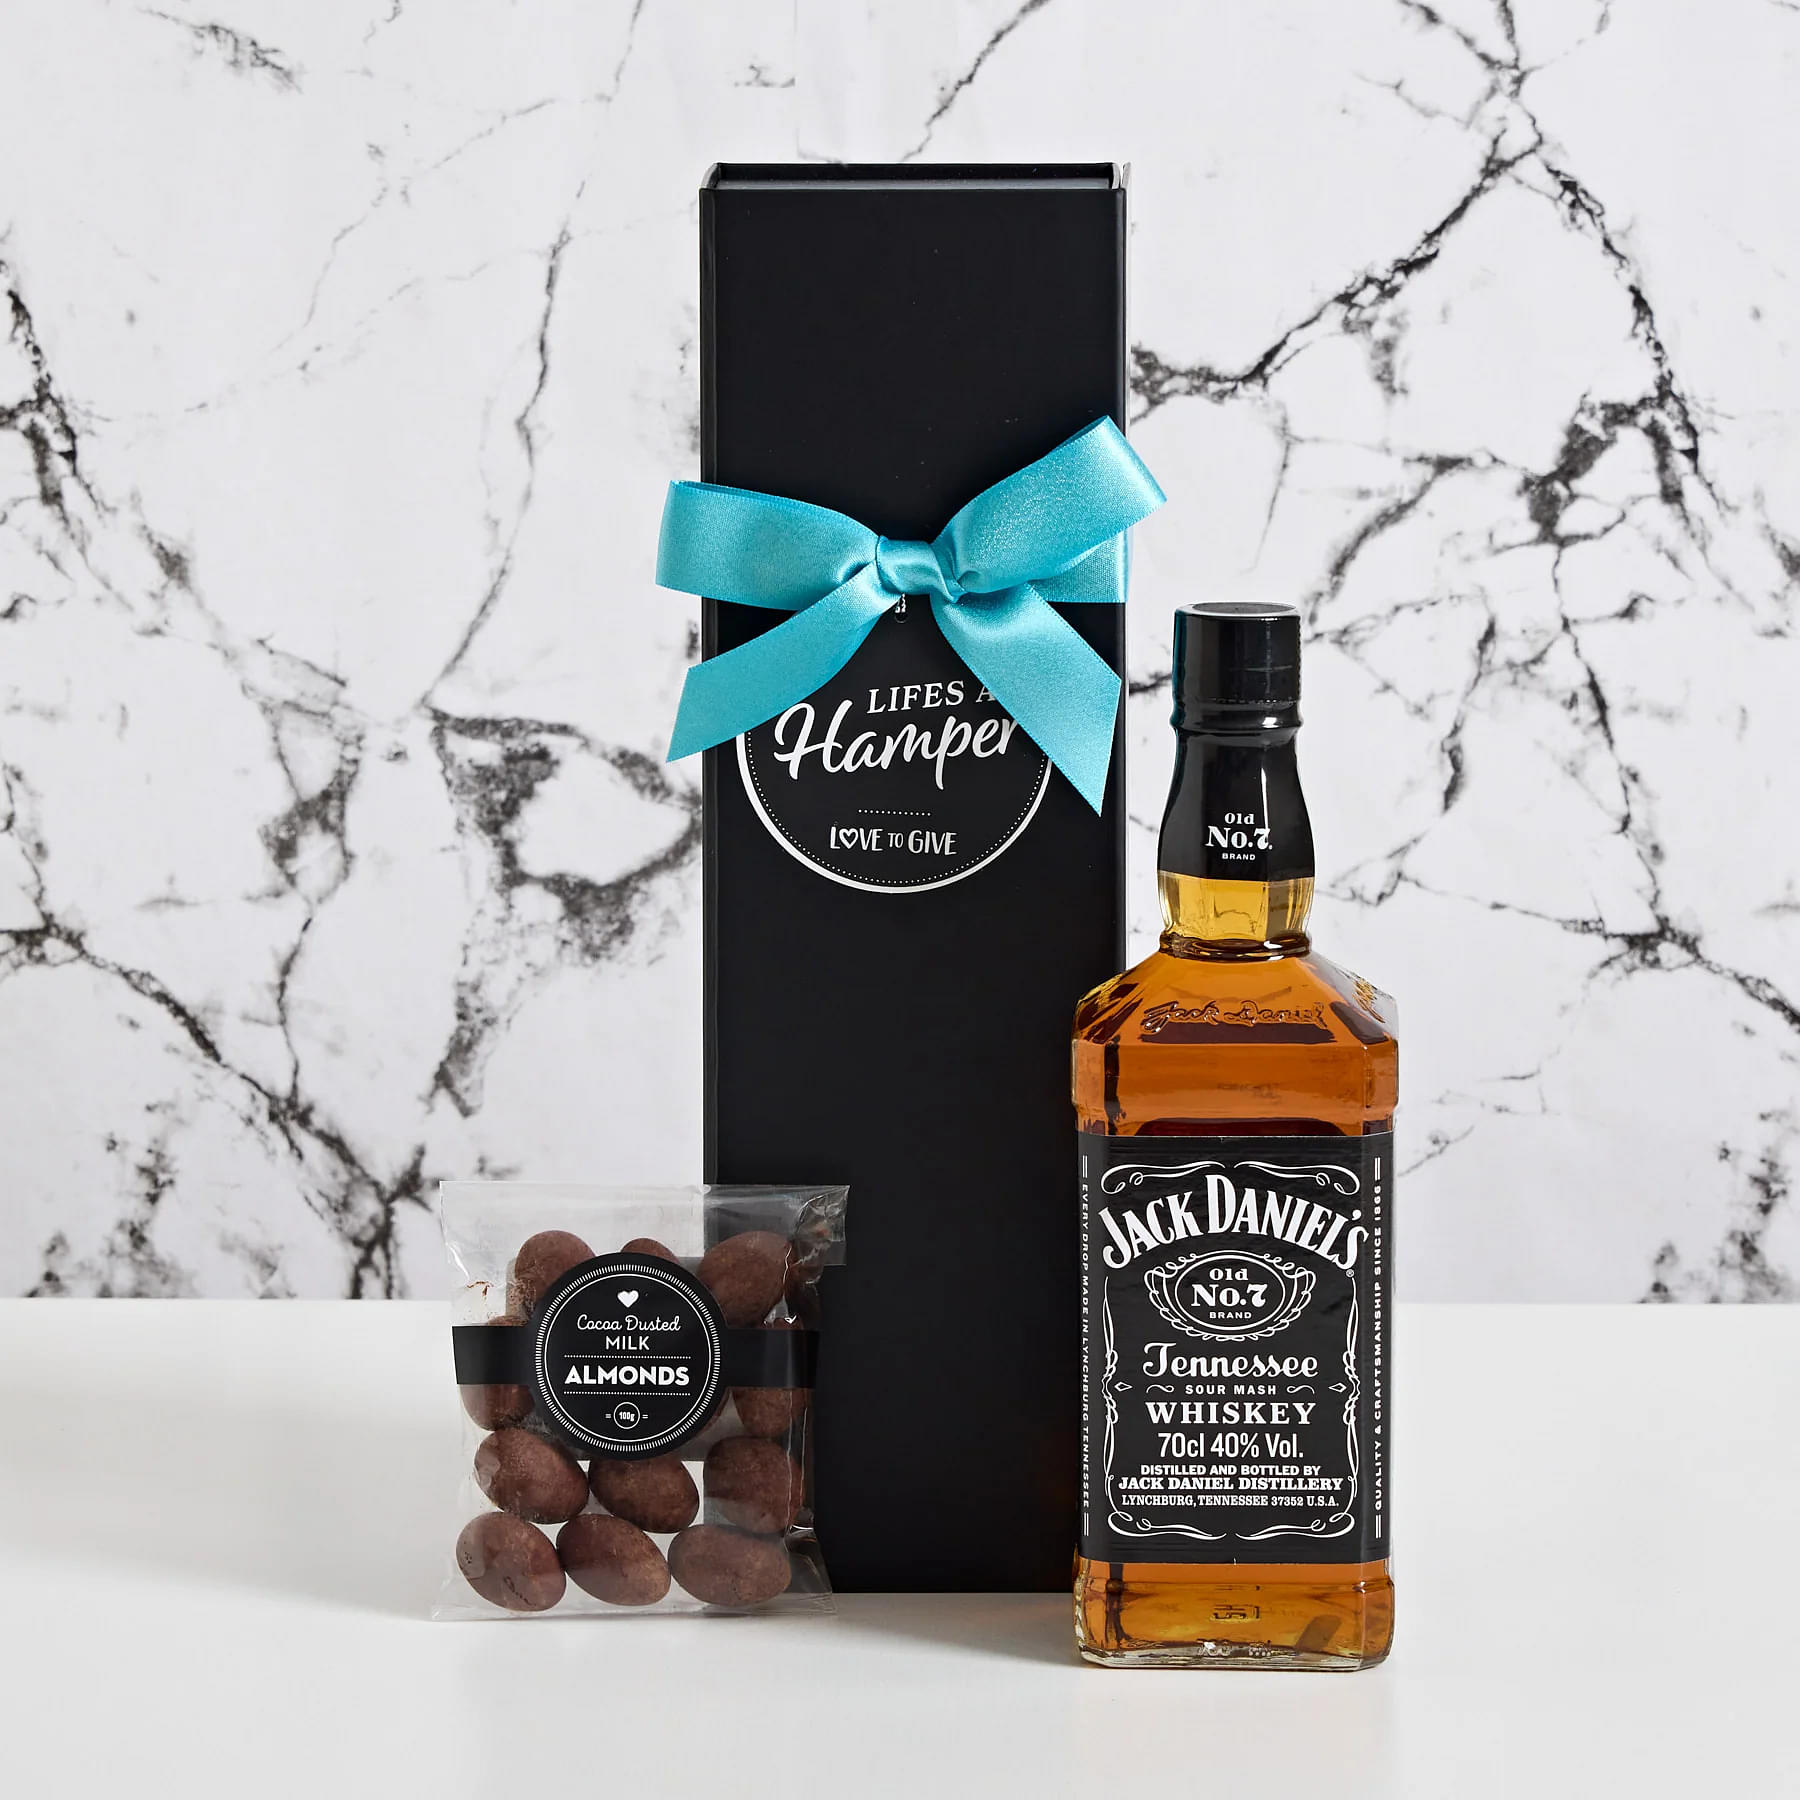 Jack Daniel's Tennessee Whiskey Hamper